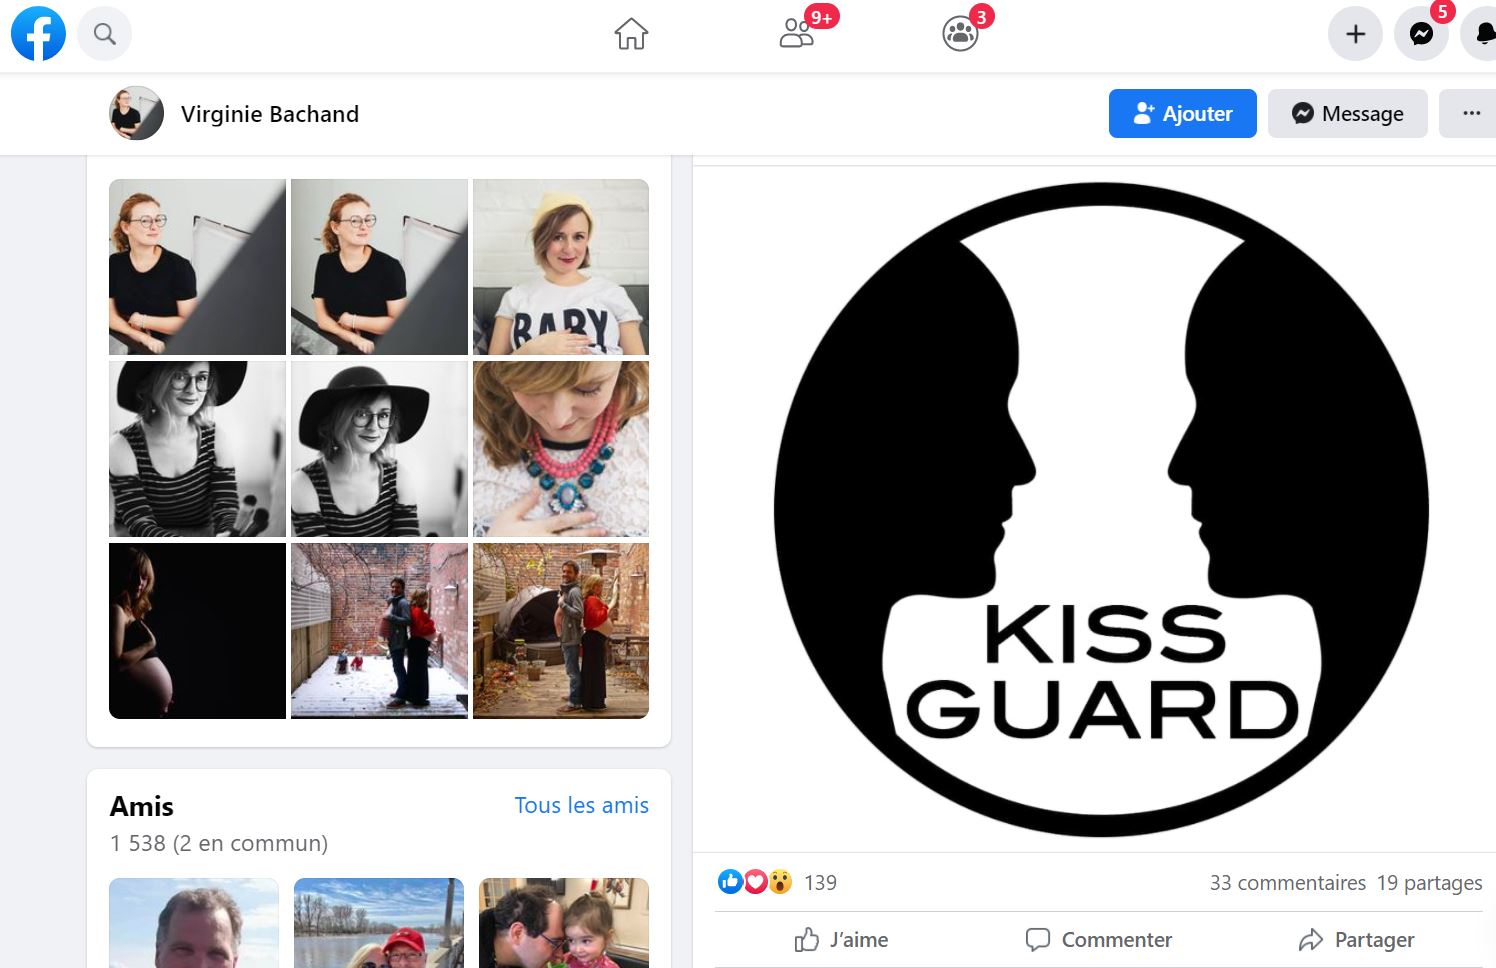 profil-facebook-de-virginie-bachand-et-son-kiss-guard.JPG